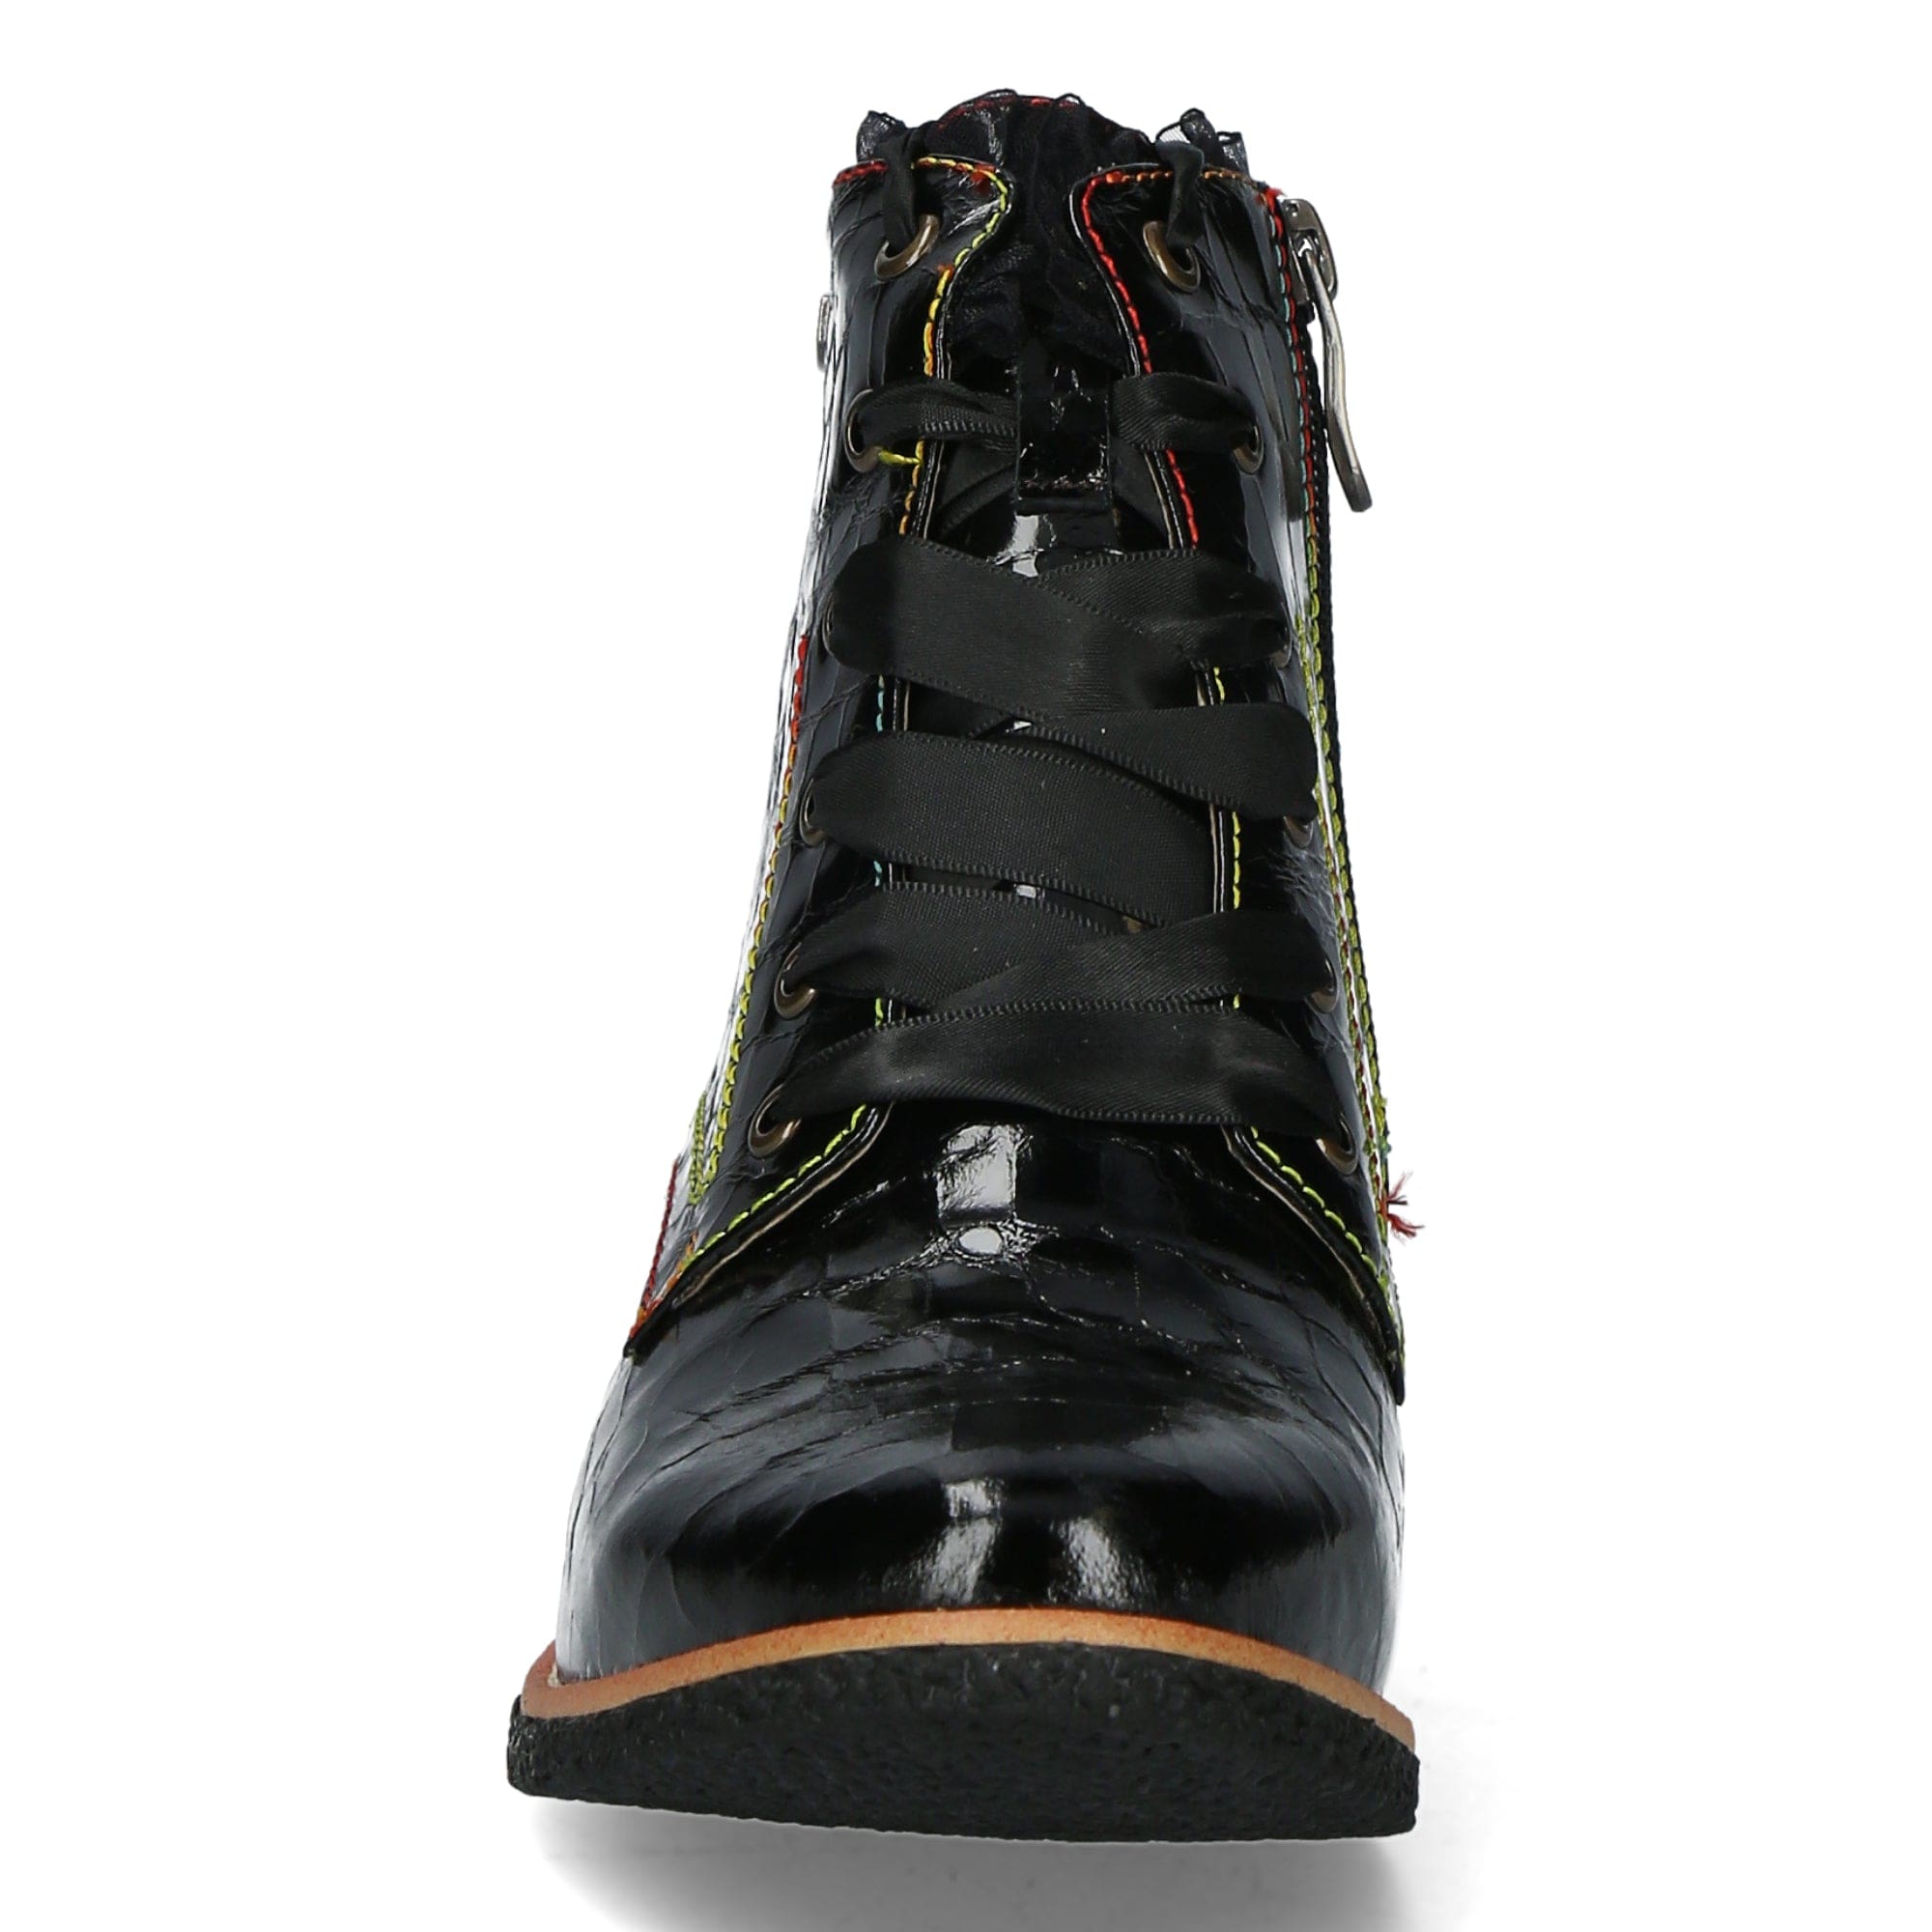 Shoe COCRALIEO 60 - Boots